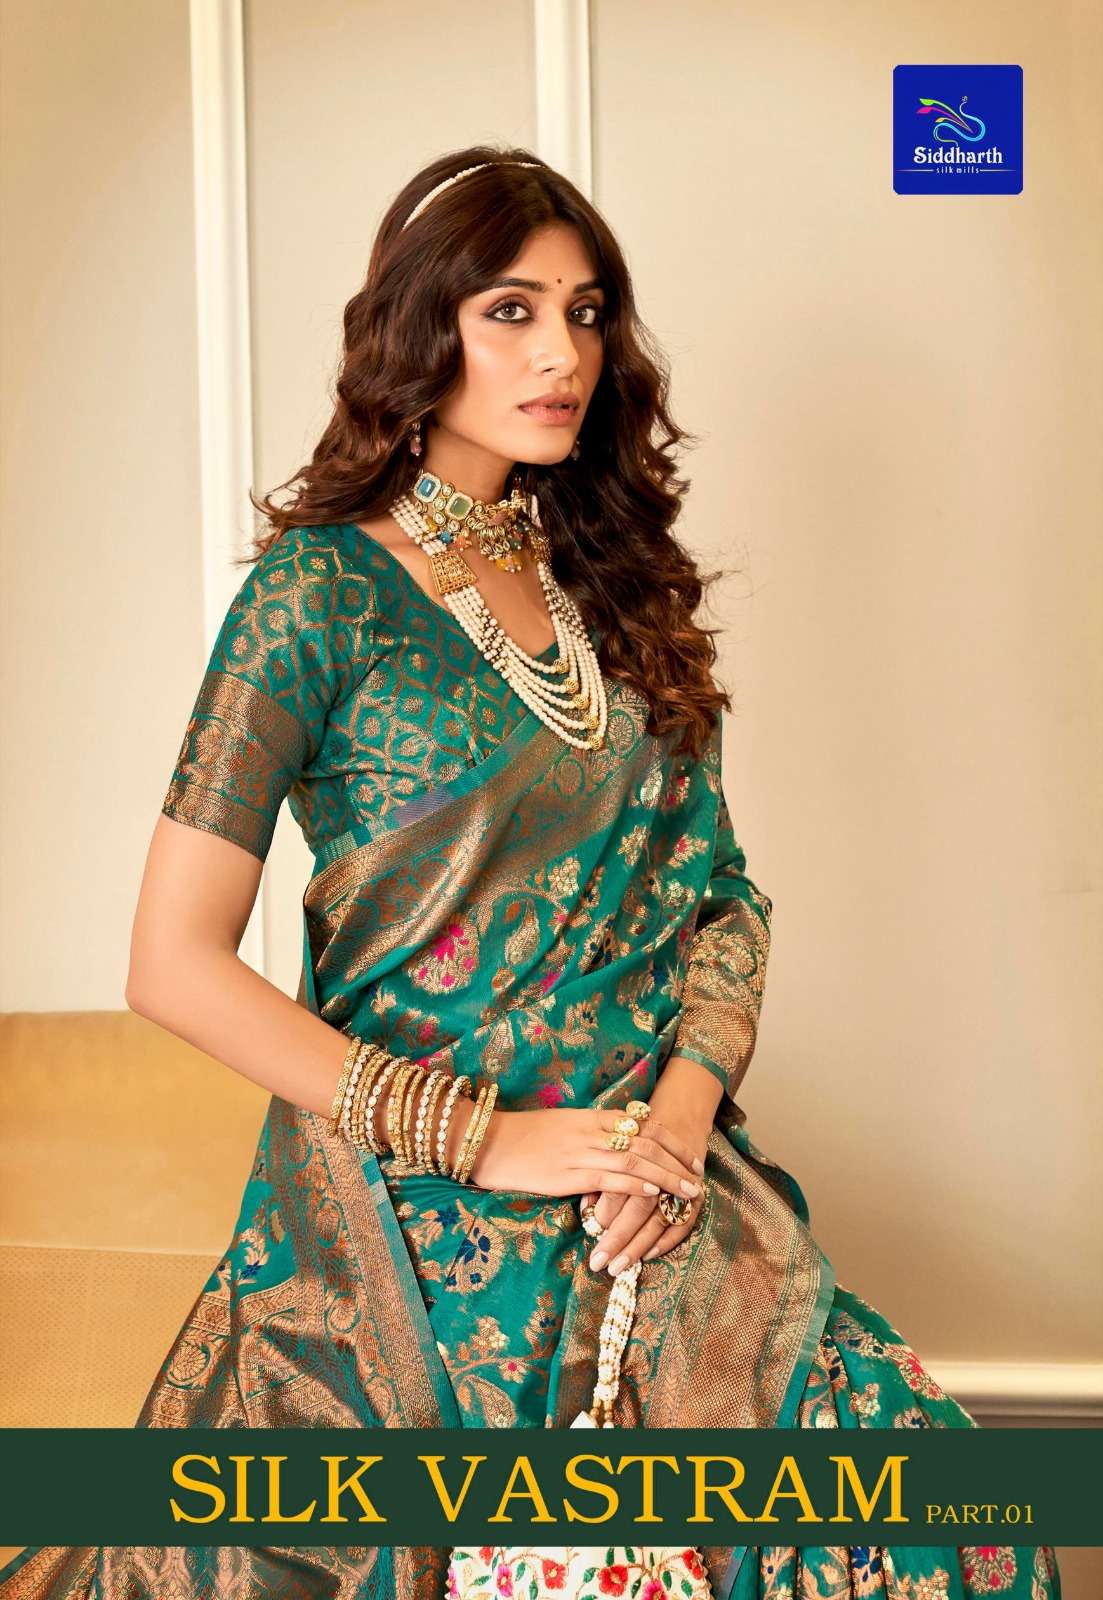 Siddharth silk mills vastram new launch fancy wear saree wholesaler